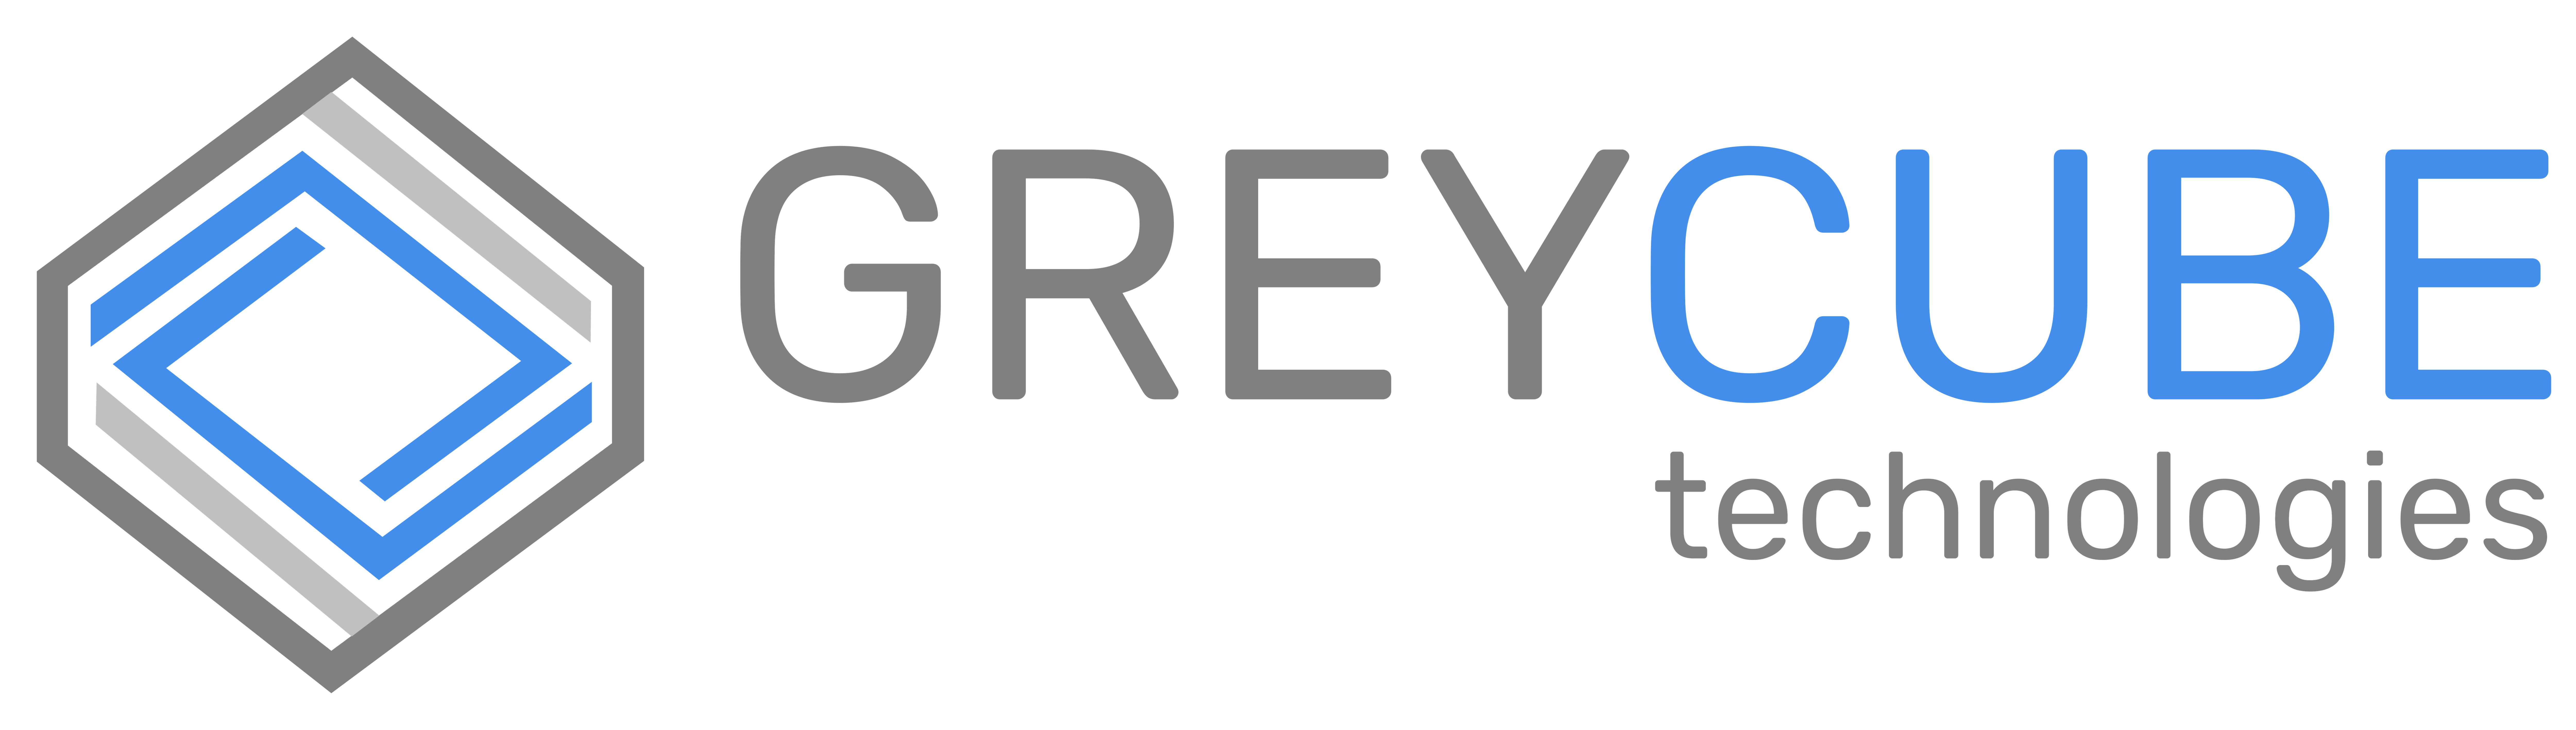 Greycube Technologies